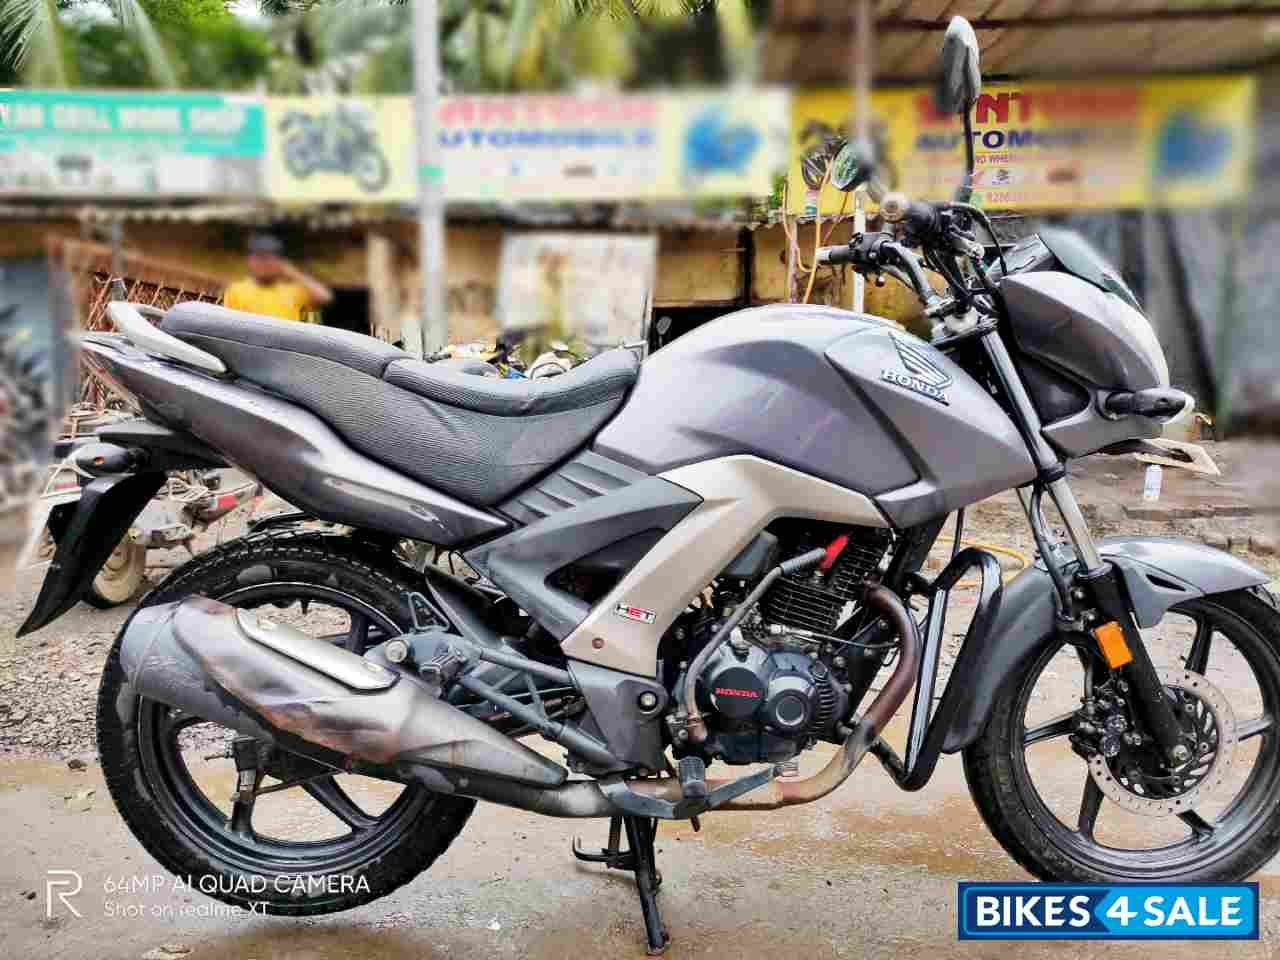 Used 2016 model Honda CB Unicorn 160 for sale in Mumbai. ID 287124 ...